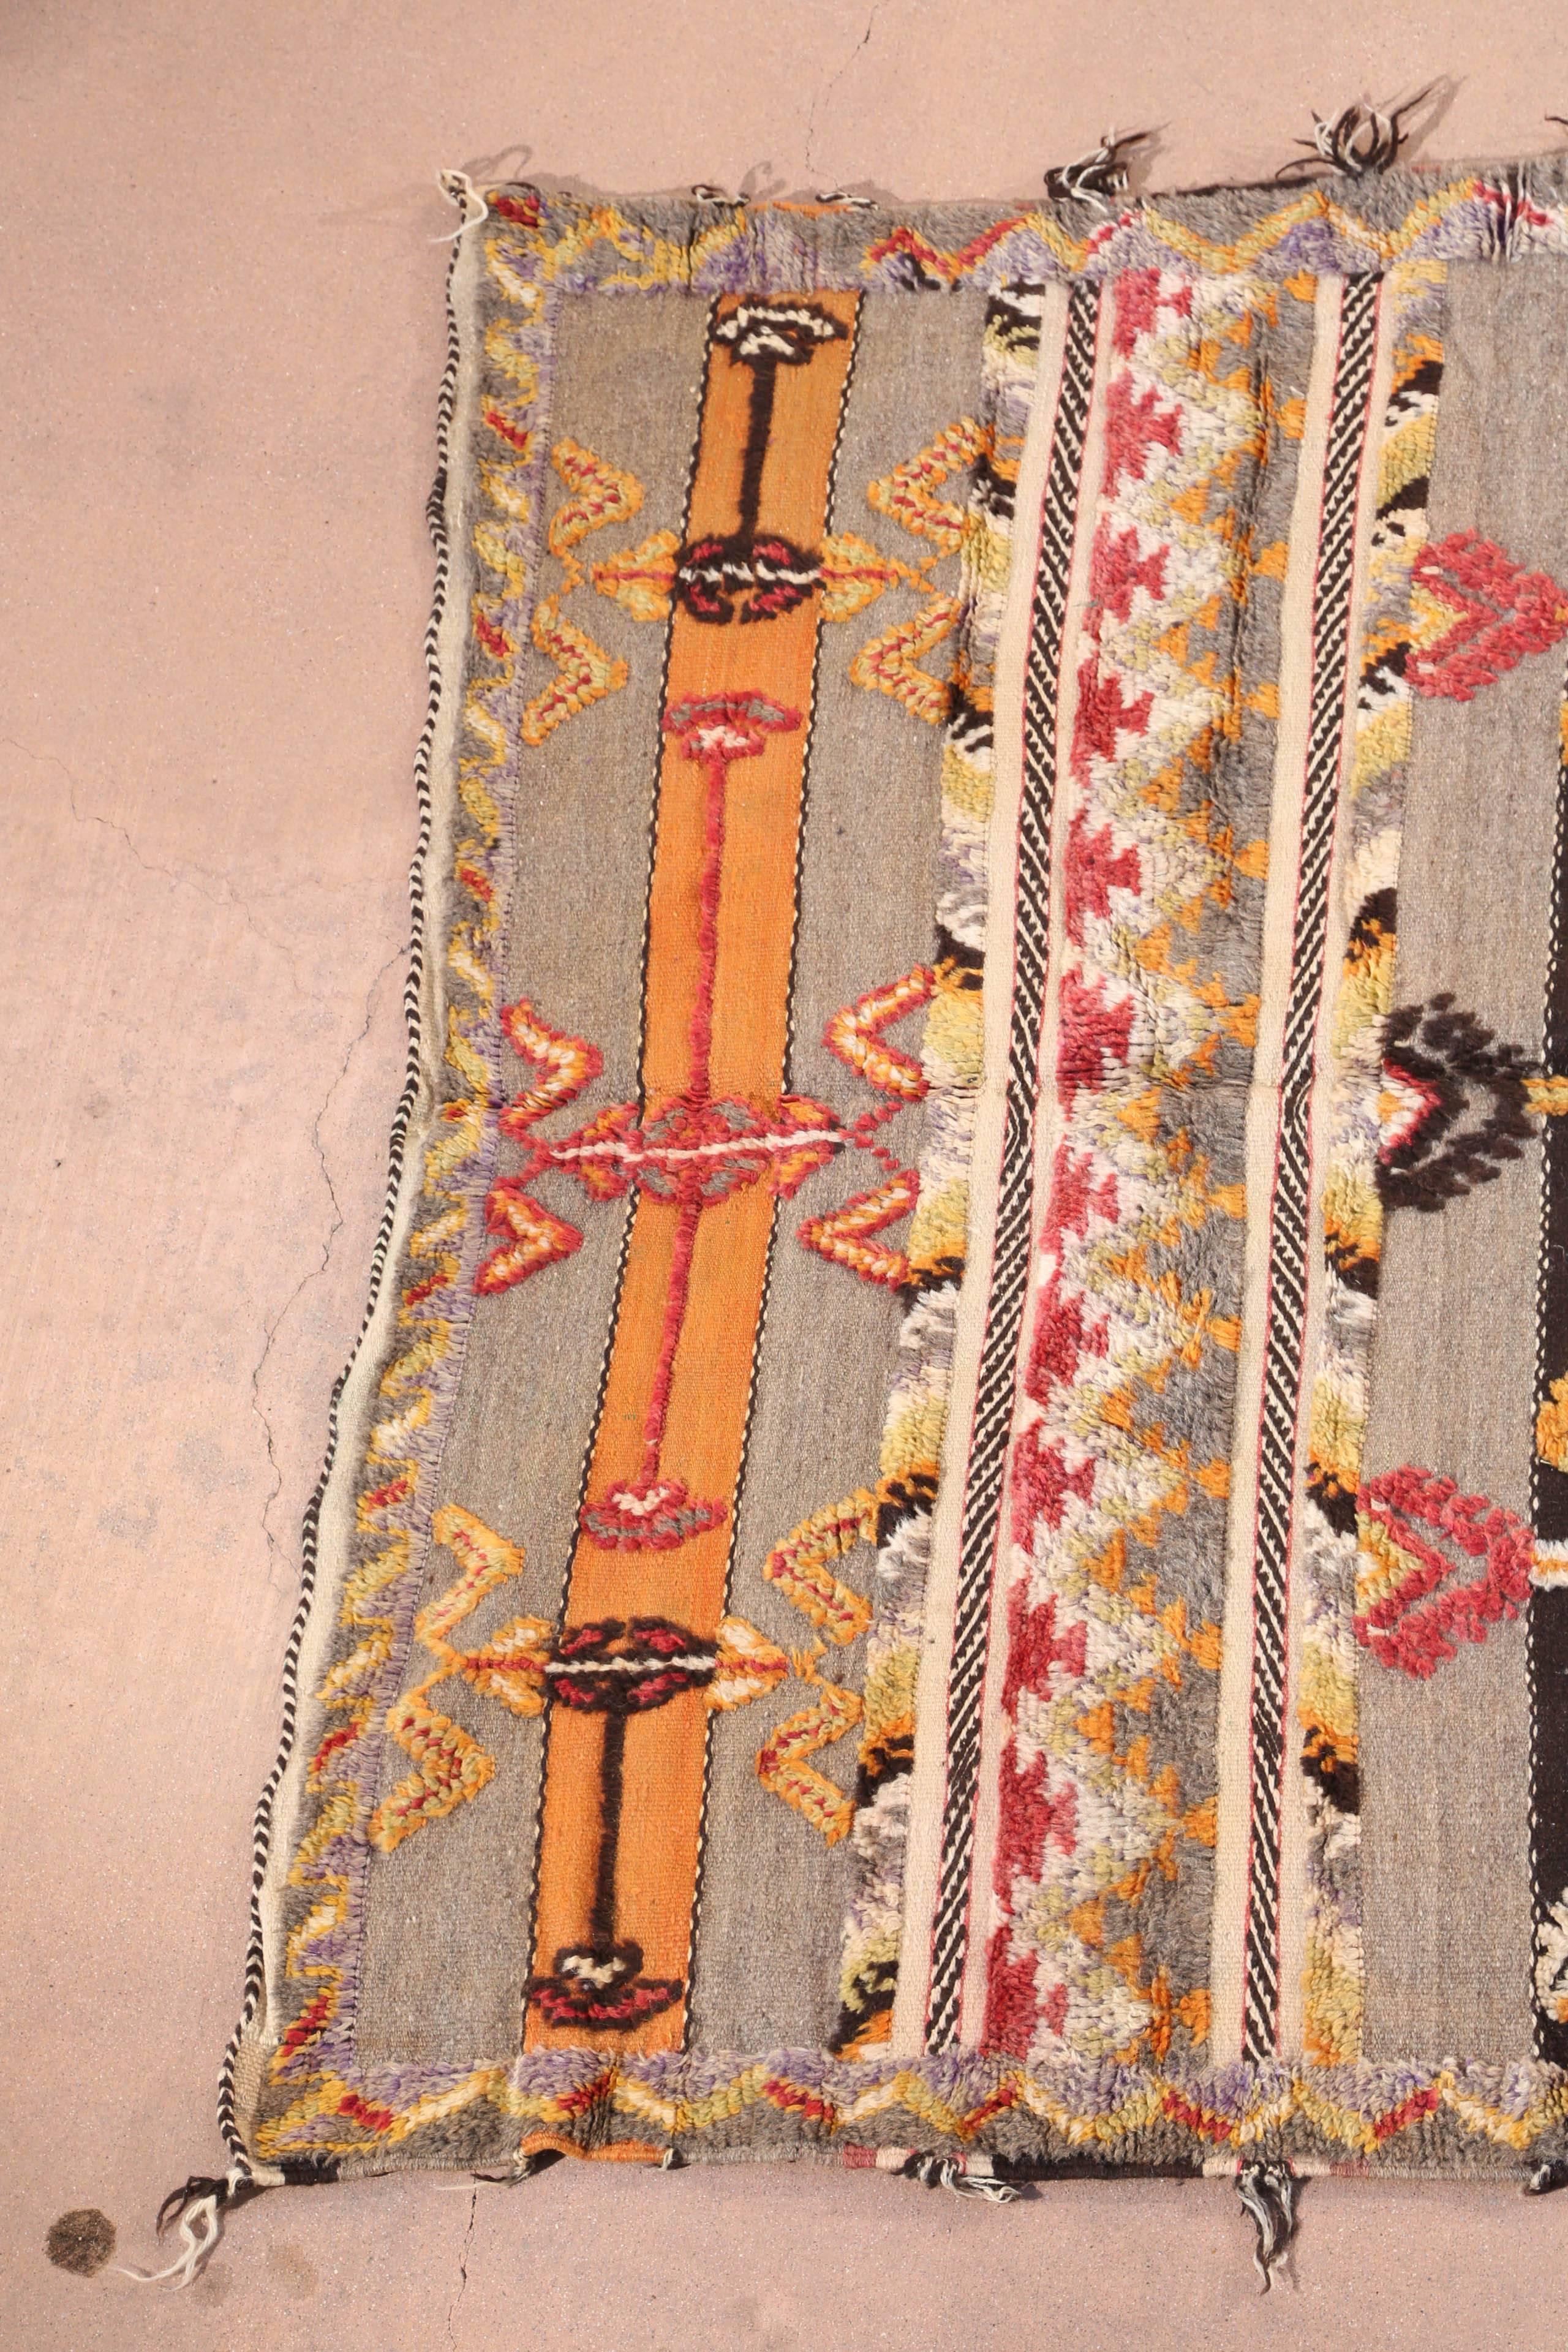 Midcentury Moroccan vintage tribal rug handwoven by Berber women in Morocco.
 